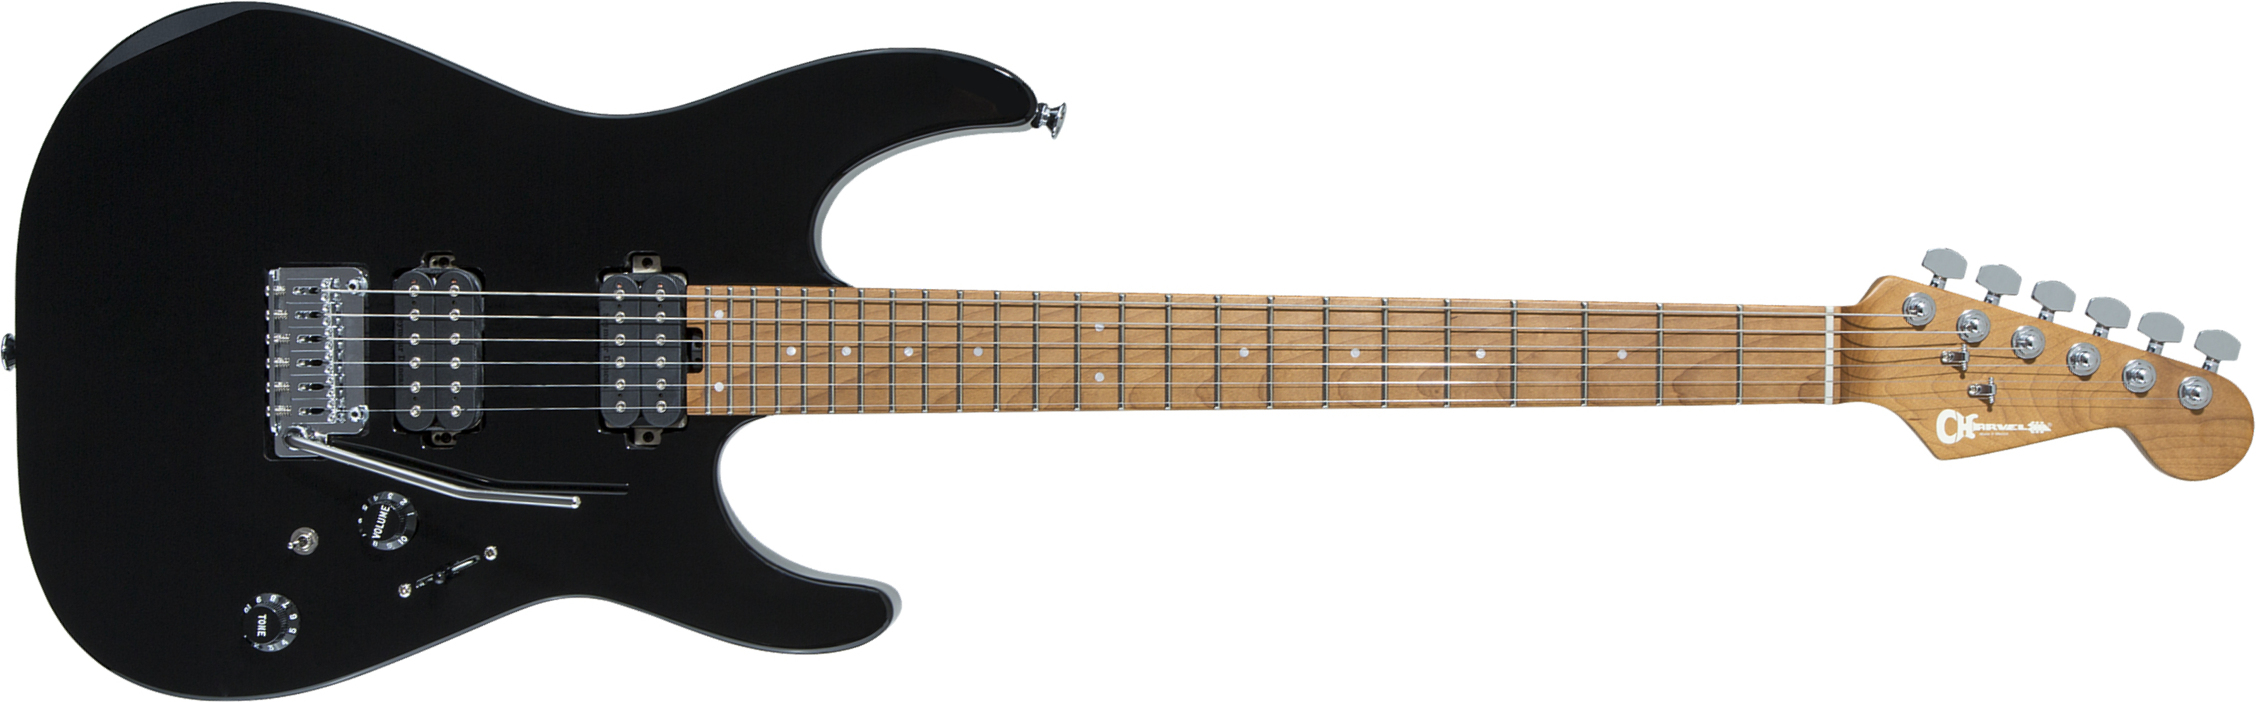 Charvel Pro-mod Dk24 Hh 2pt Cm Seymour Duncan Trem Mn - Black - Elektrische gitaar in Str-vorm - Main picture